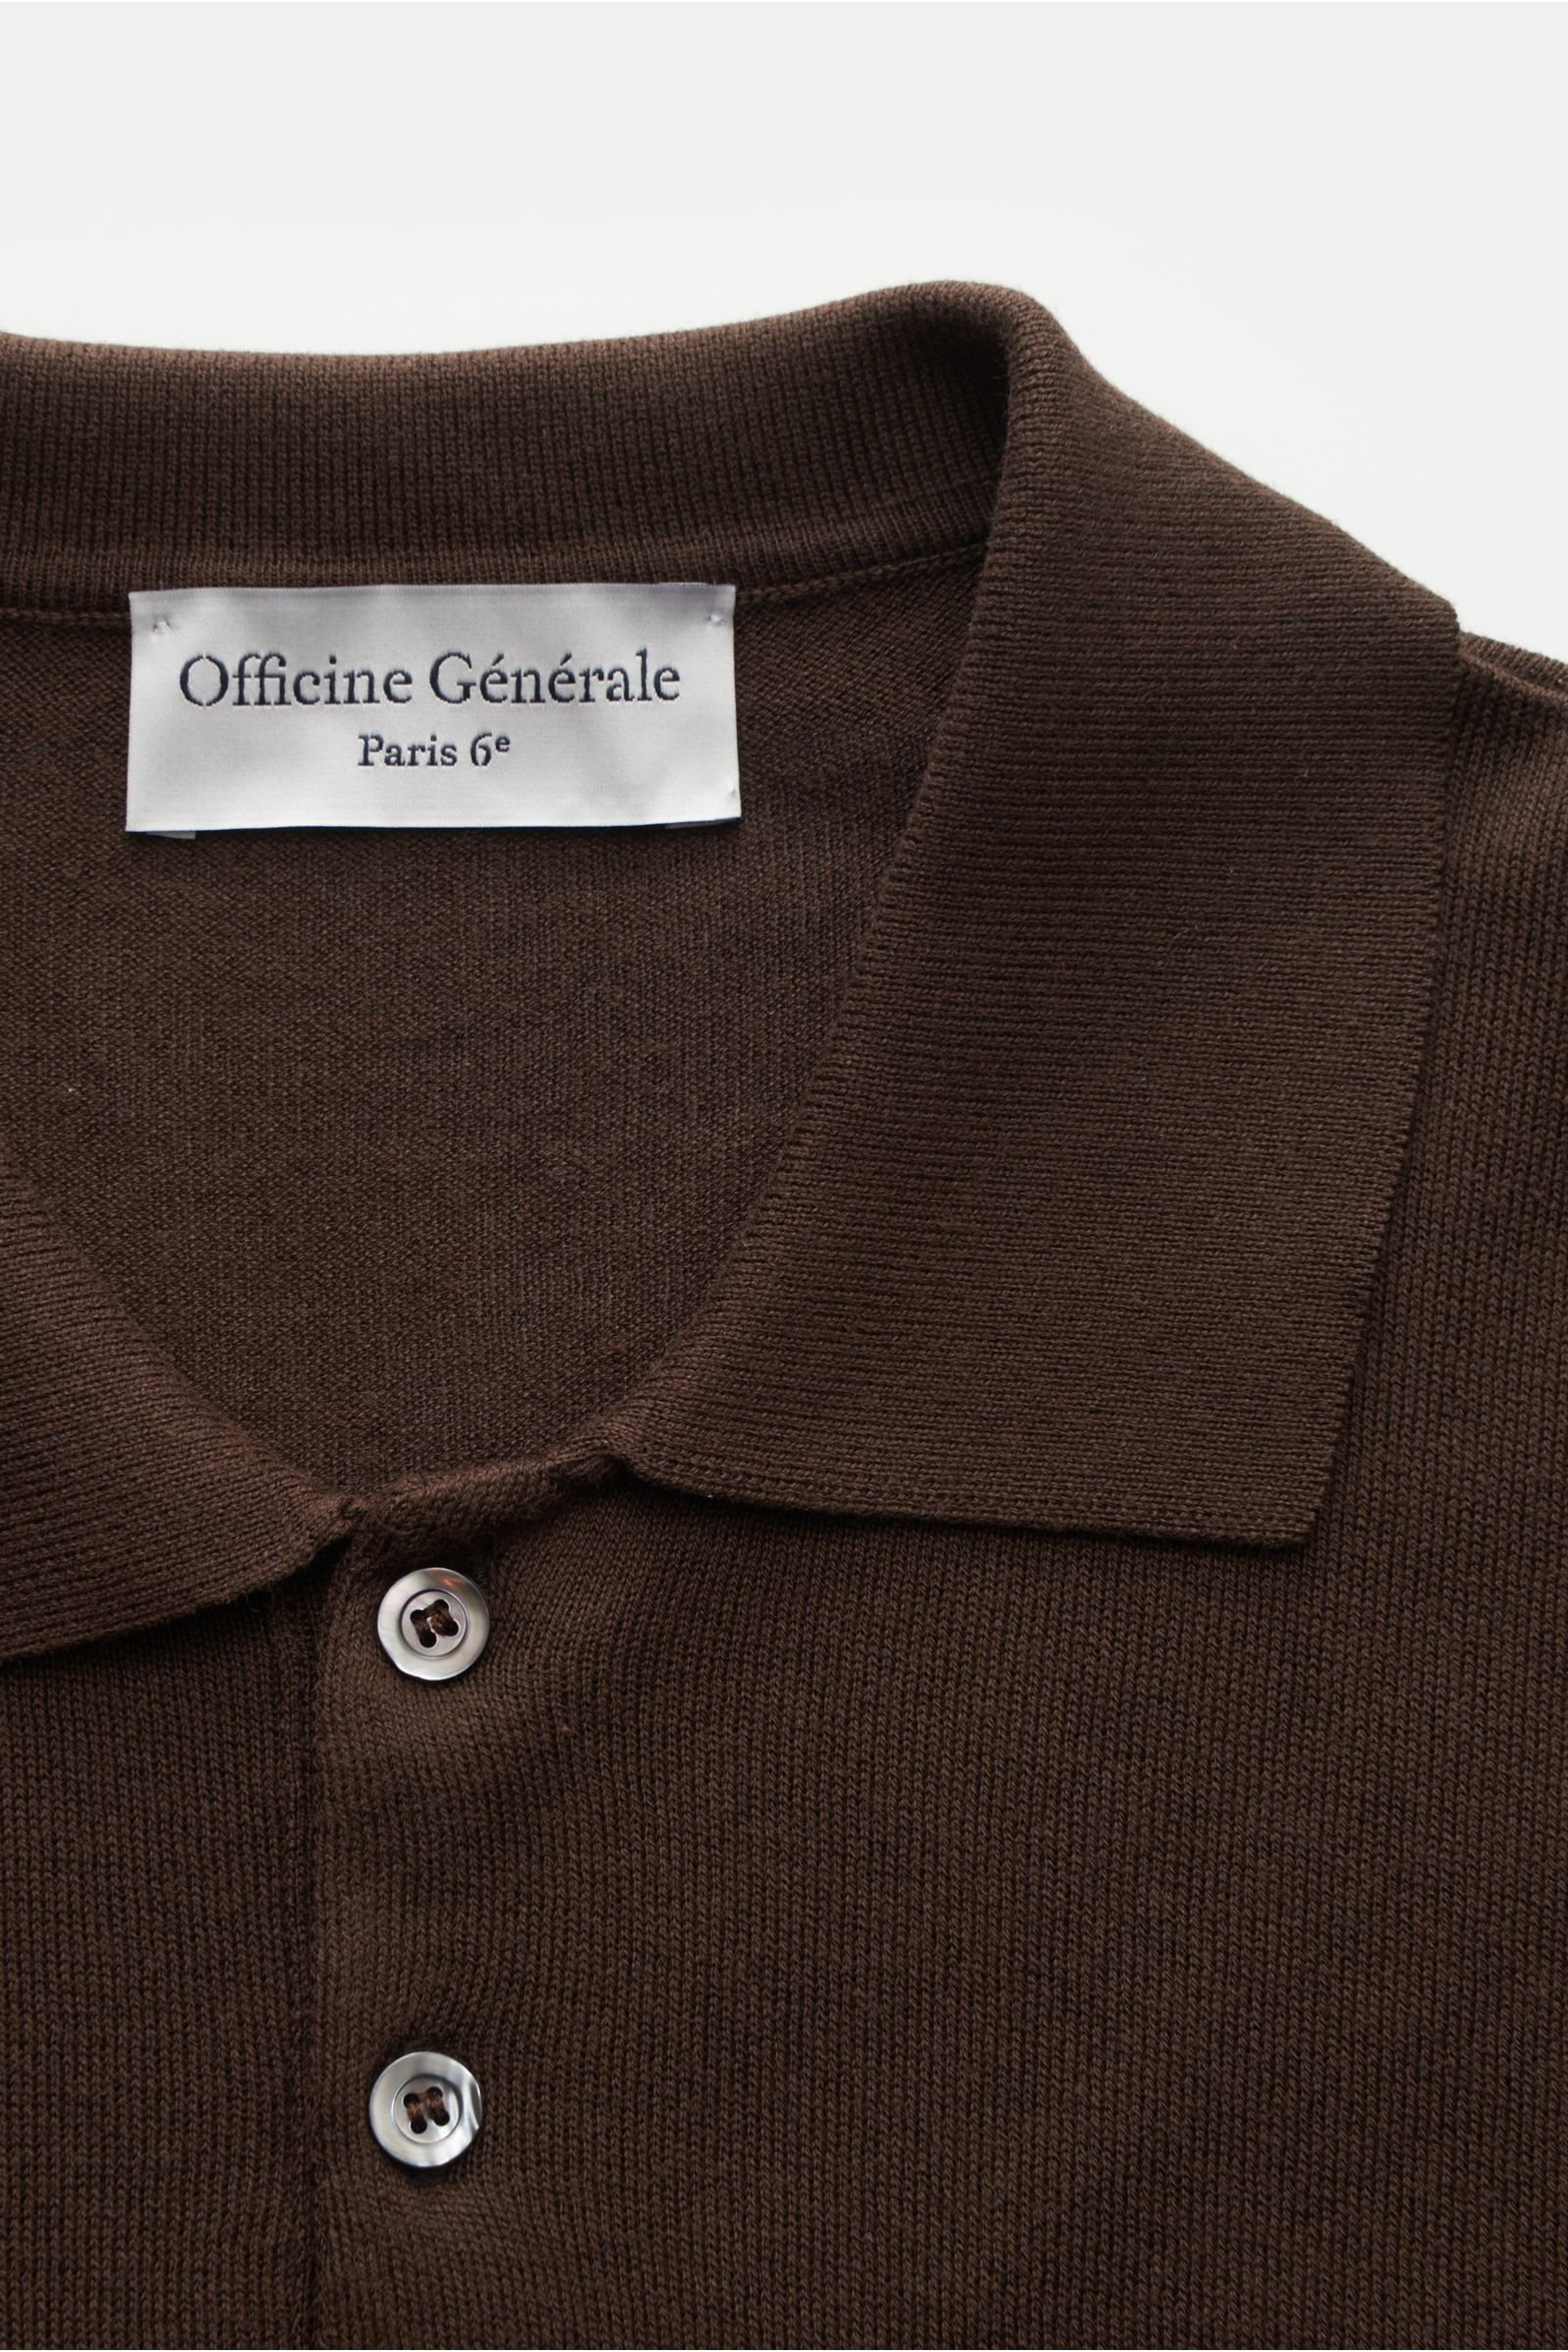 OFFICINE GÉNÉRALE short sleeve knit polo 'Brutus' dark brown | BRAUN ...